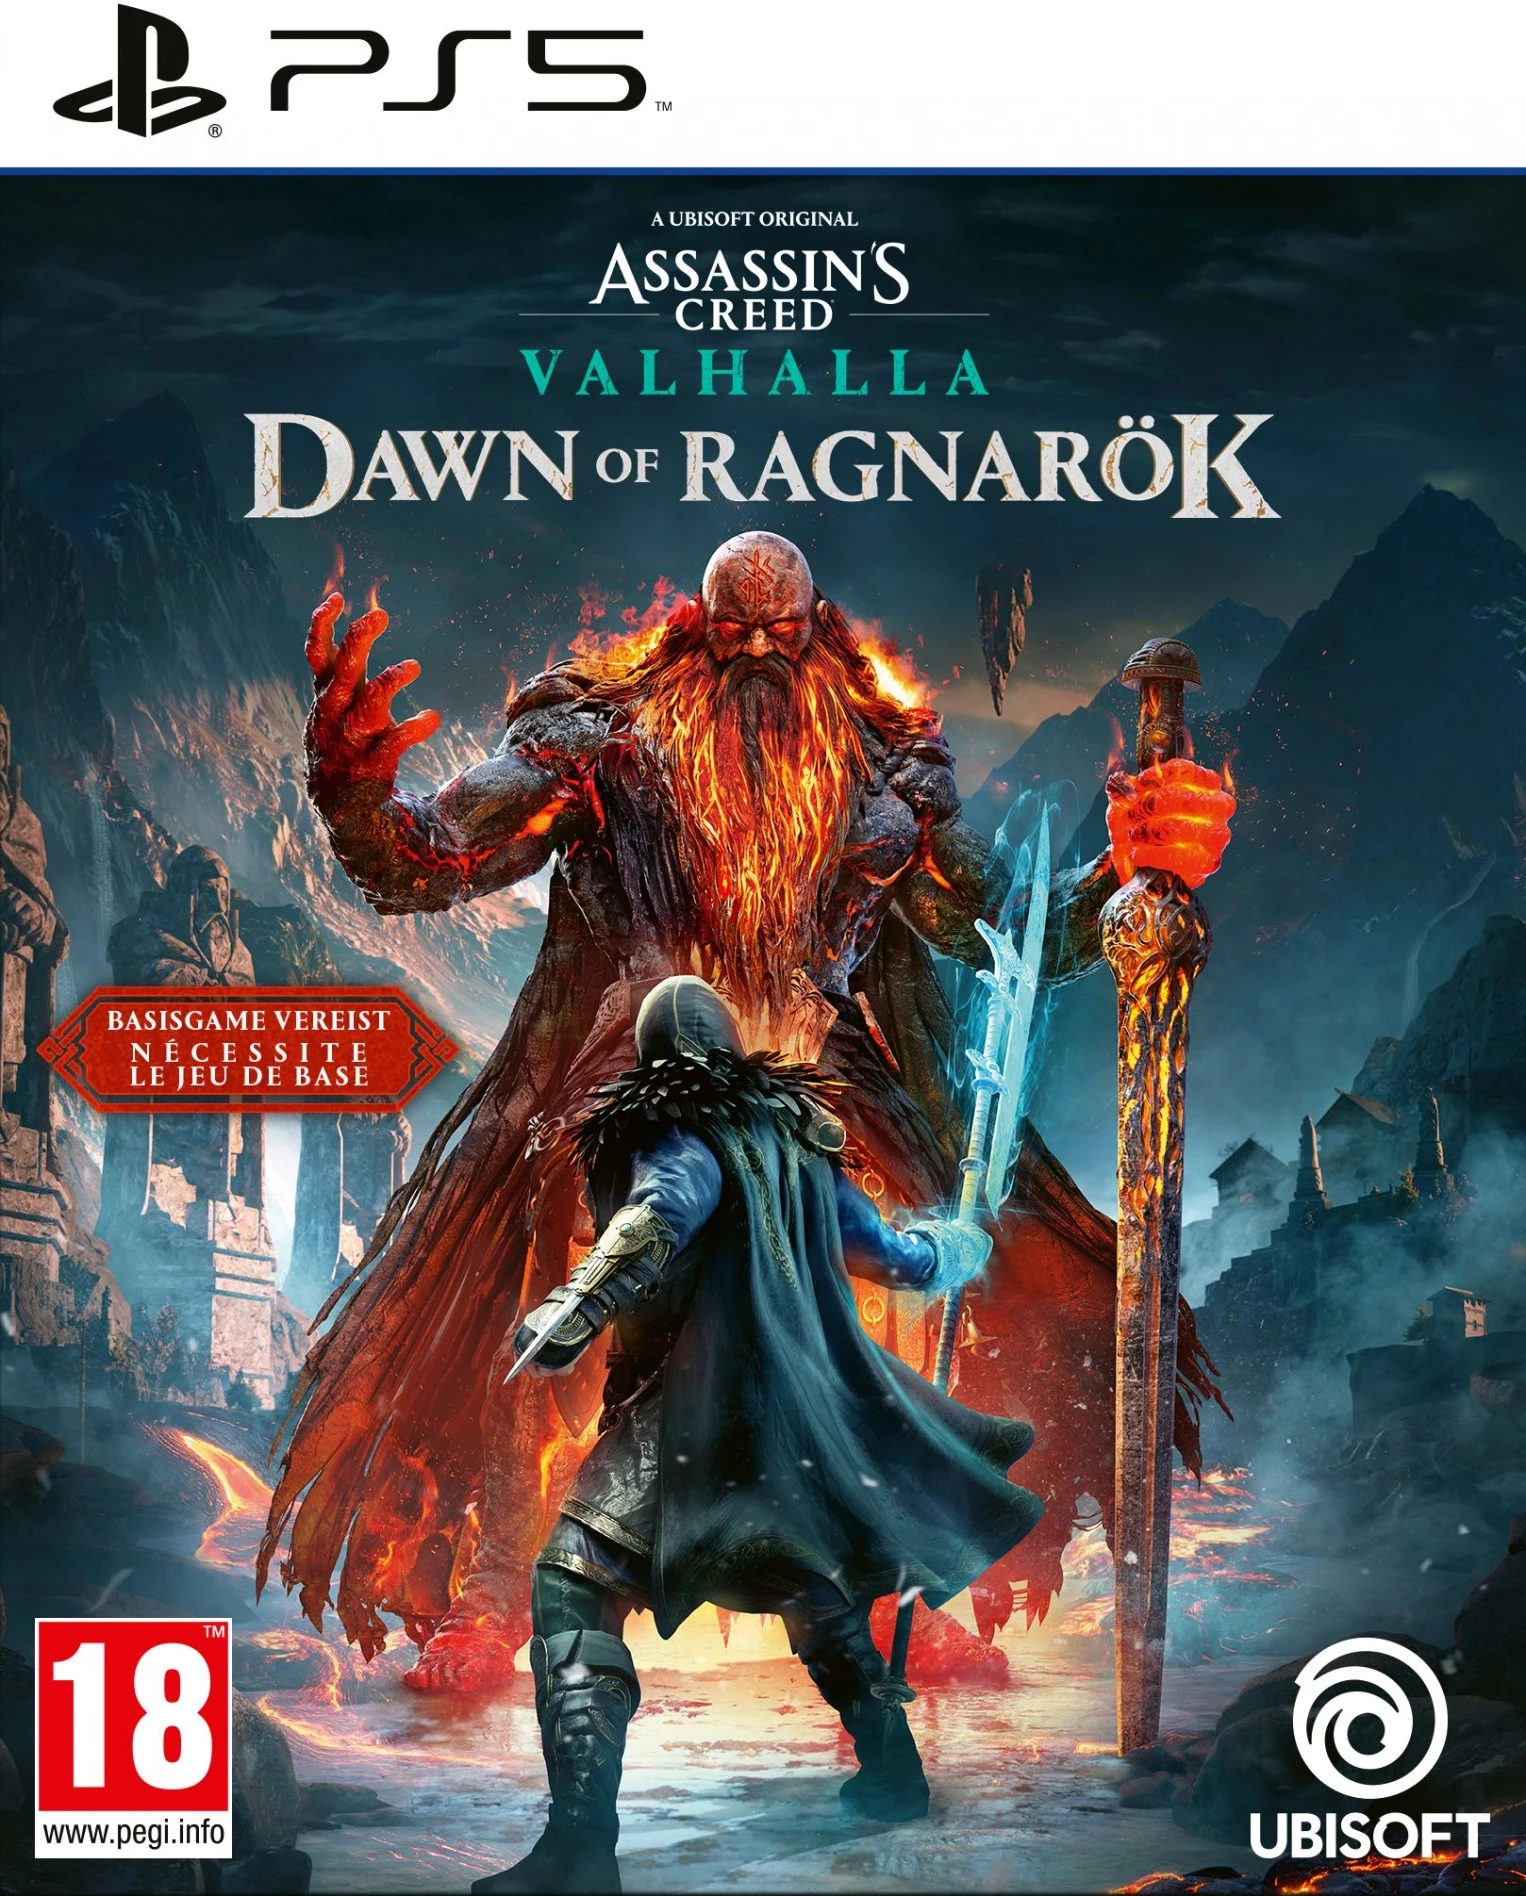 Assassin's Creed Valhalla Dawn of Ragnarök (add-on)(Code in a Box) voor de PlayStation 5 preorder plaatsen op nedgame.nl